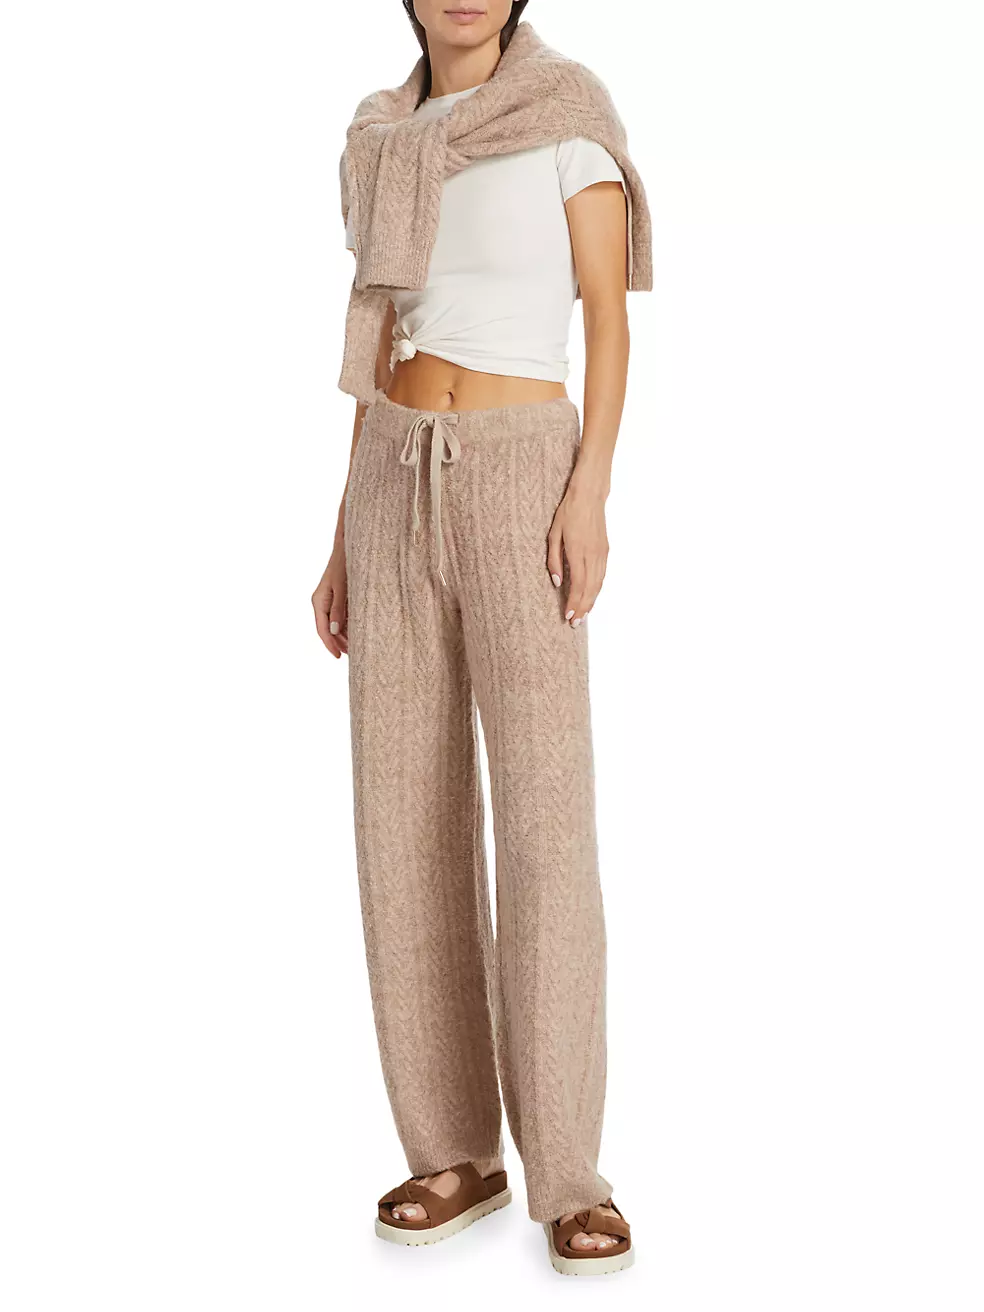 Stellae Dux Women's Cable-Knit Drawstring Sweatpants - Camel Heather - Size Xs